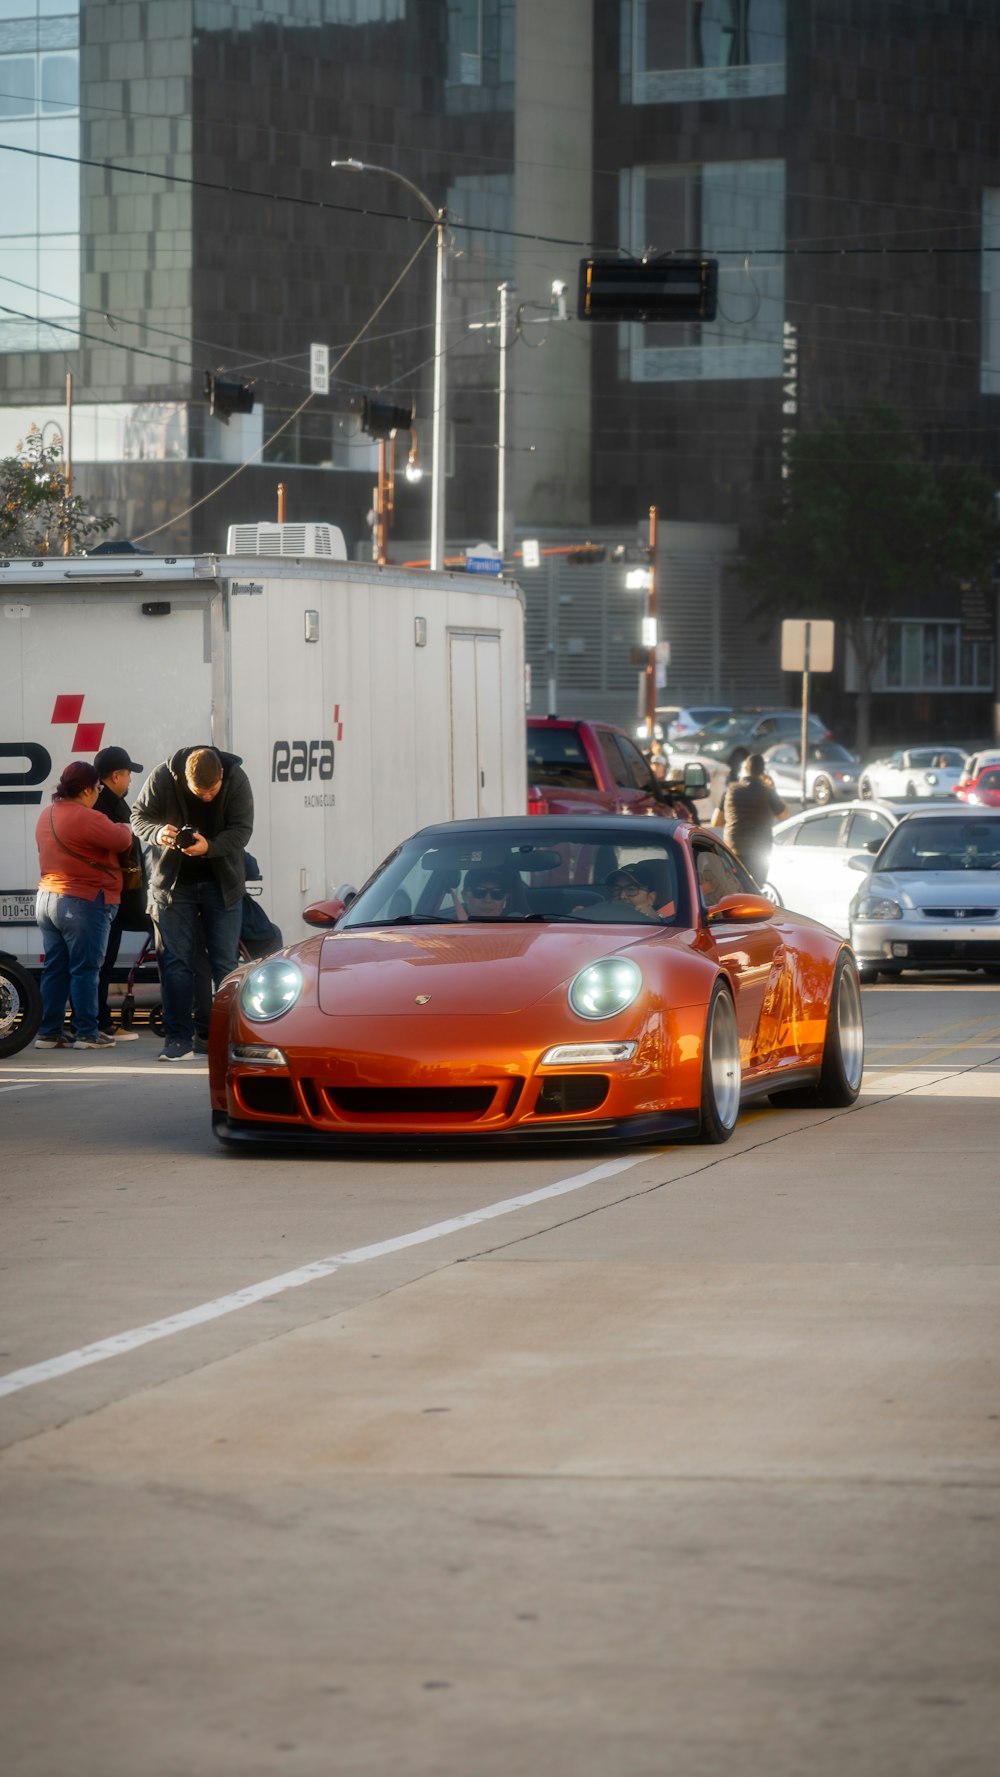 an orange sports car driving down a city street